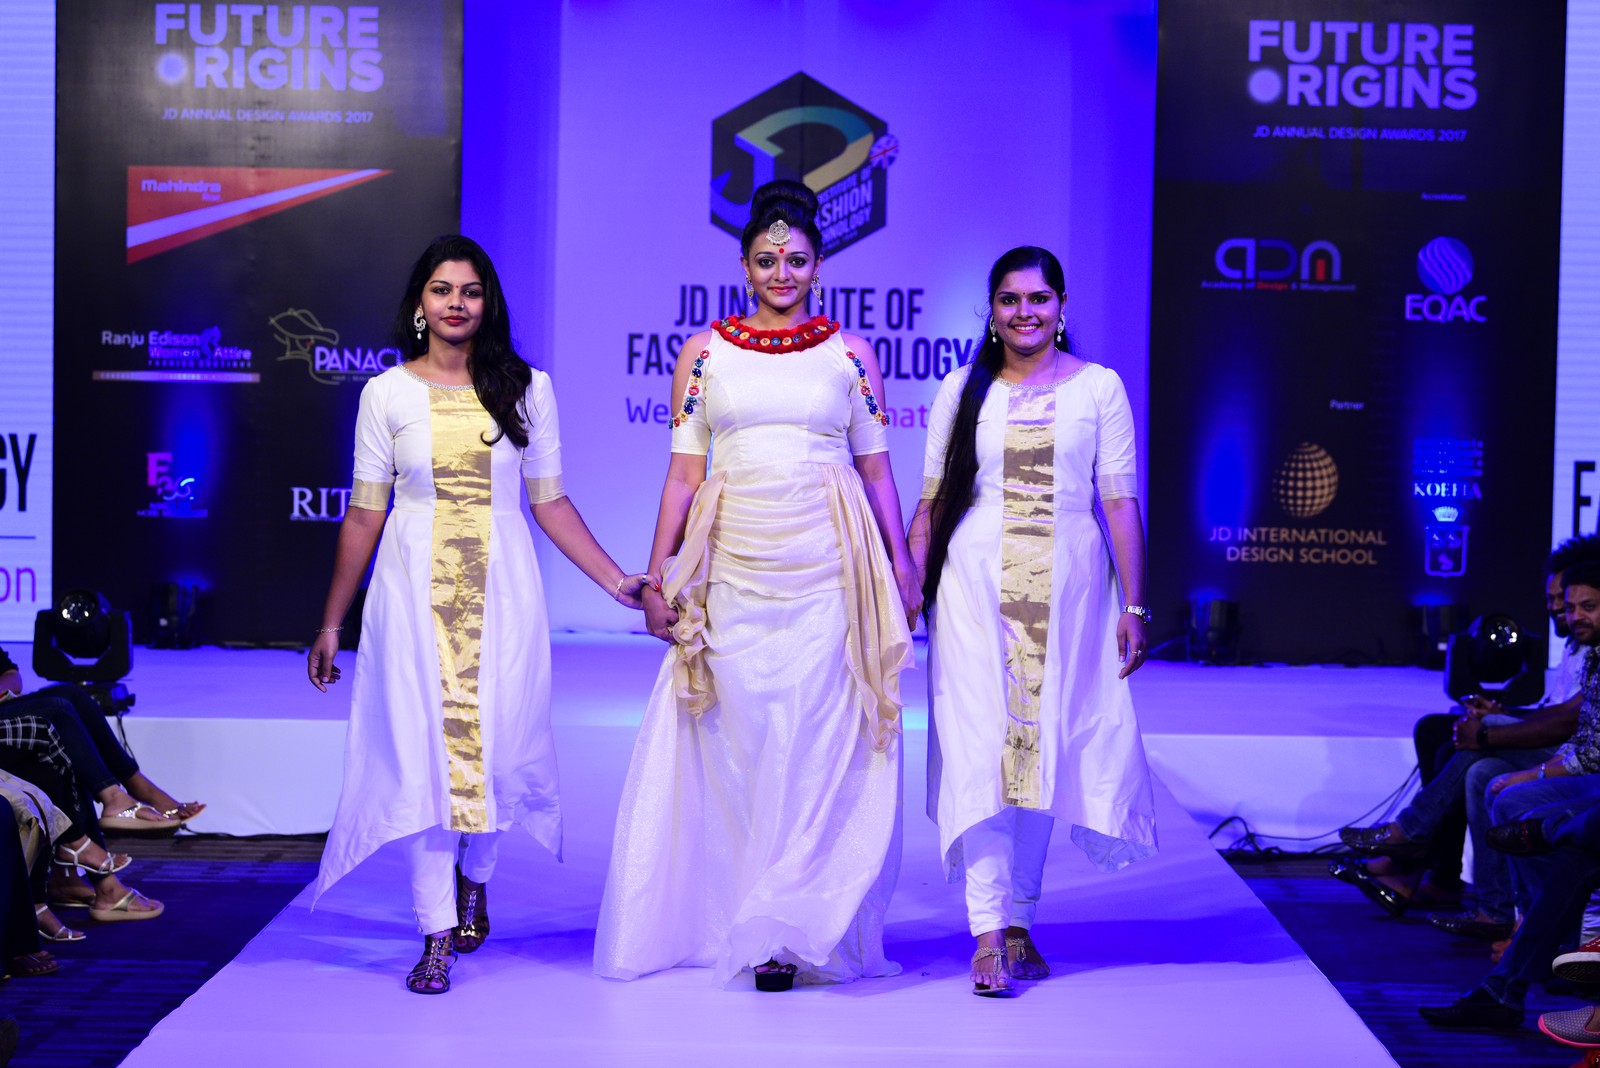 aartha parambrya - Aartha Parambrya E28093 Future Origin E28093 JD Annual Design Awards 2017 Cochin 12 - Aartha Parambrya &#8211; Future Origin &#8211; JD Annual Design Awards 2017